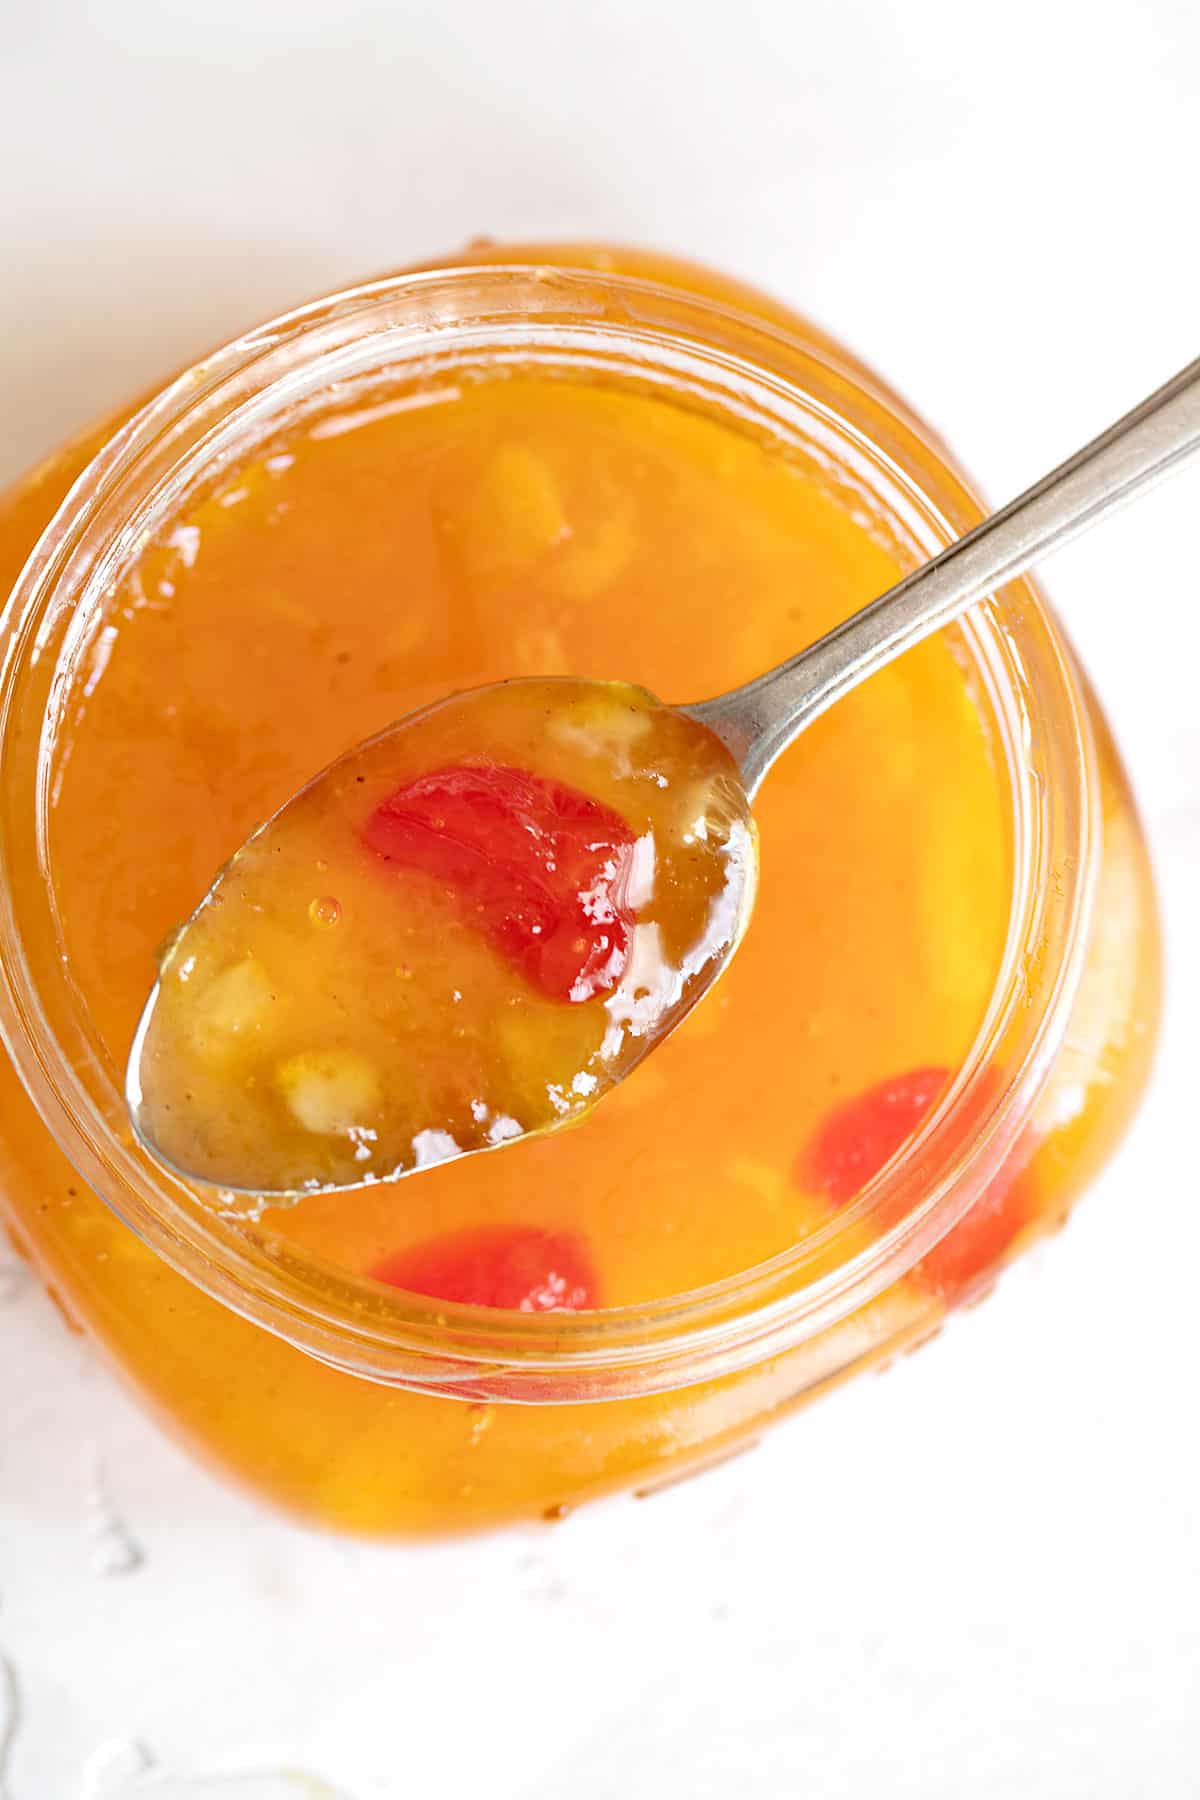 peach marmalade in spoon on top of jar